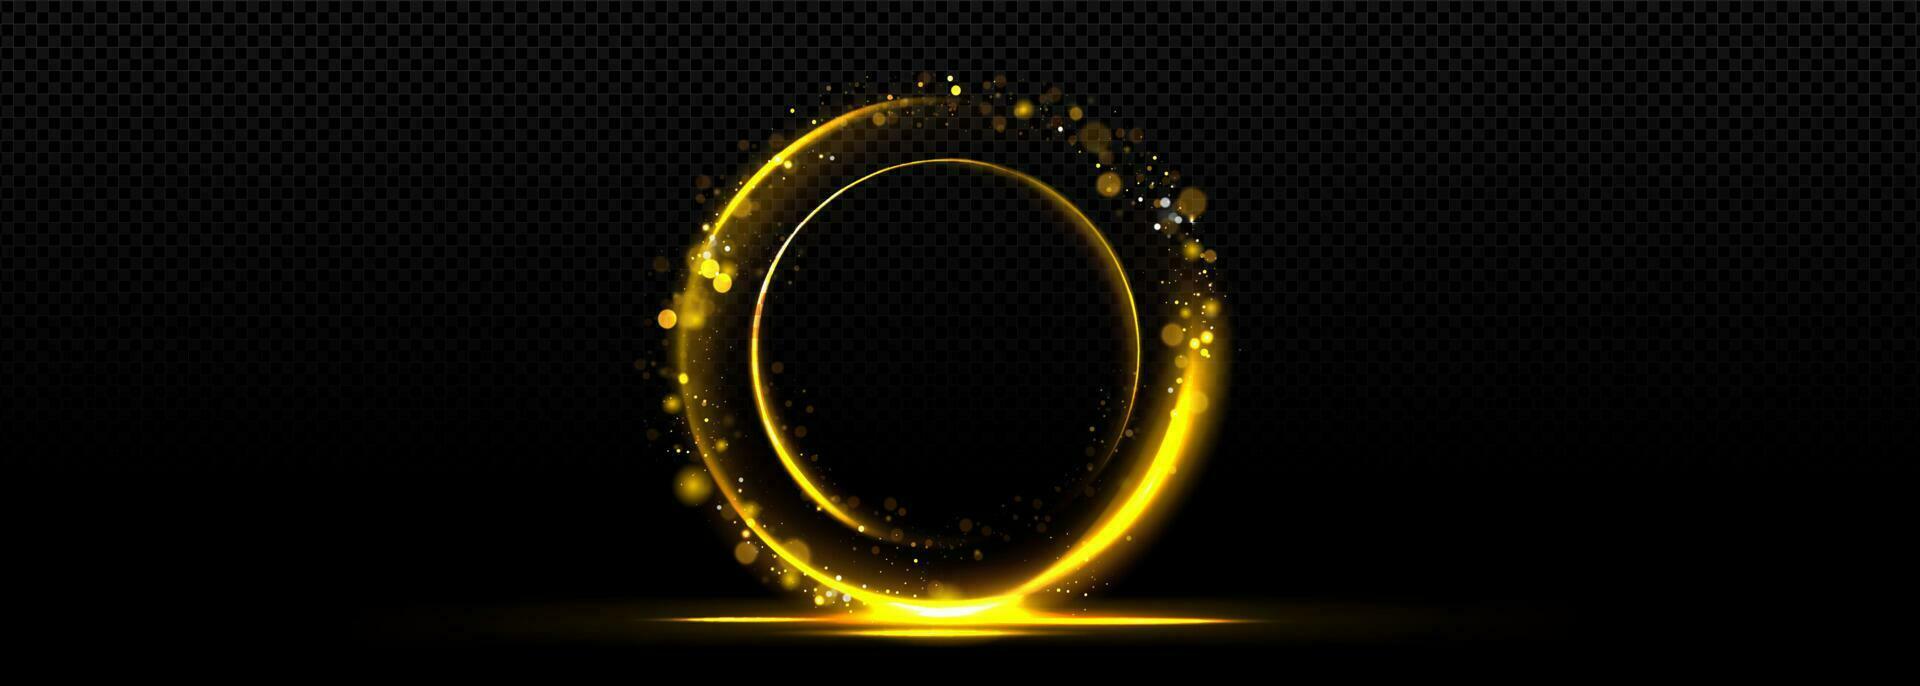 guld bokeh cirkel med glitter på svart bakgrund vektor